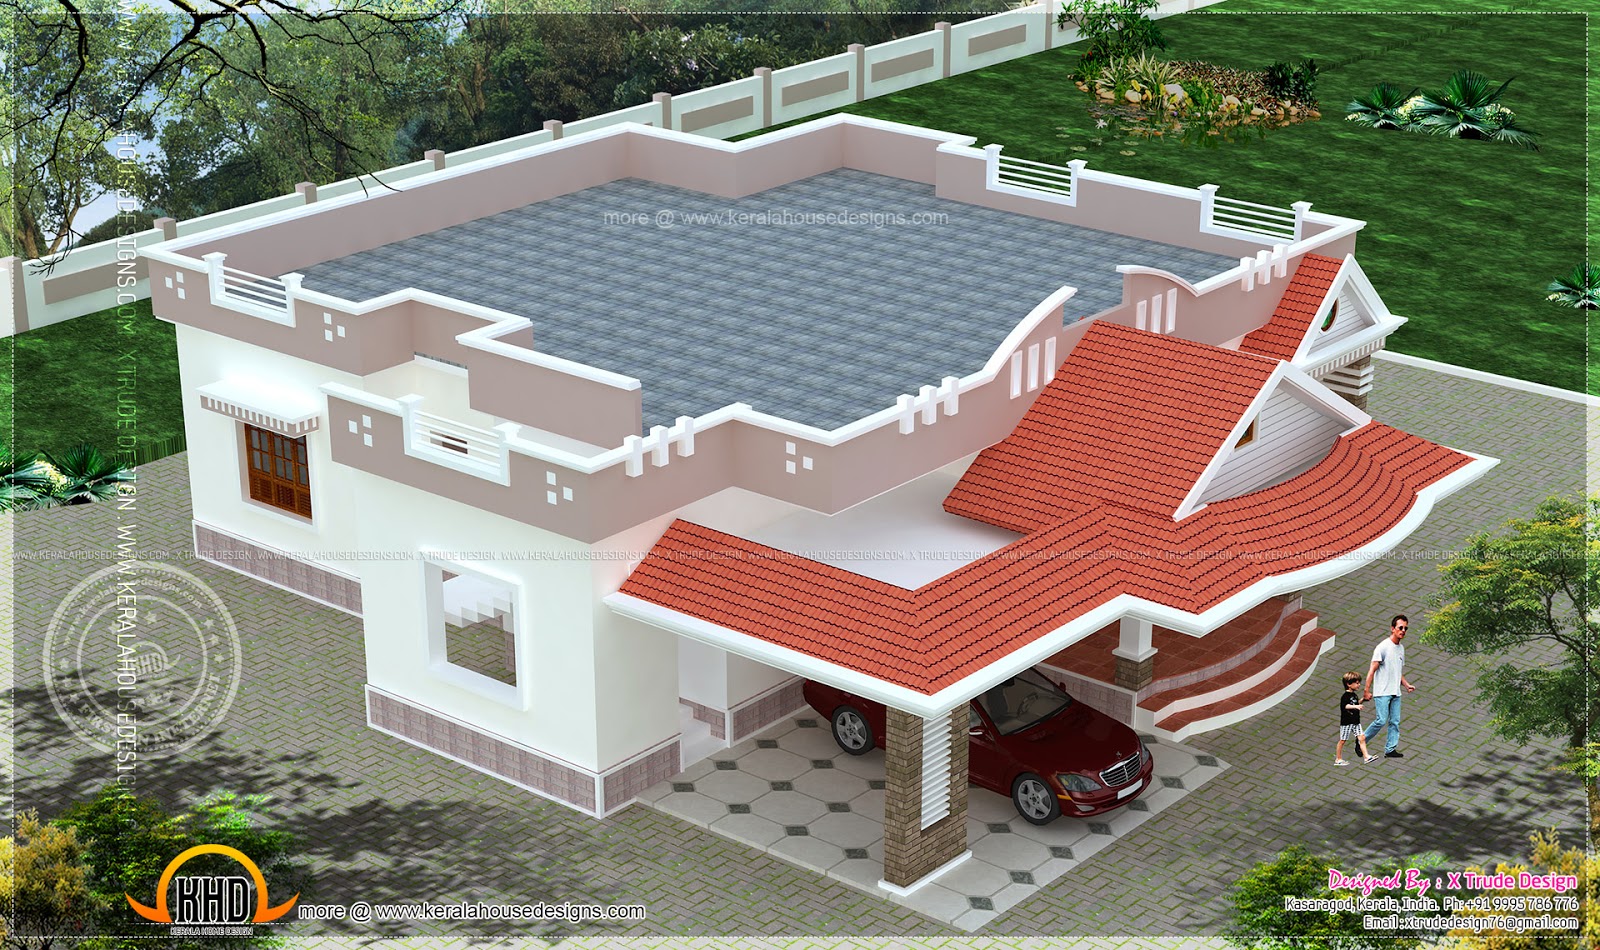  Single  storied 2 bedroom house  elevation Home  Kerala Plans 